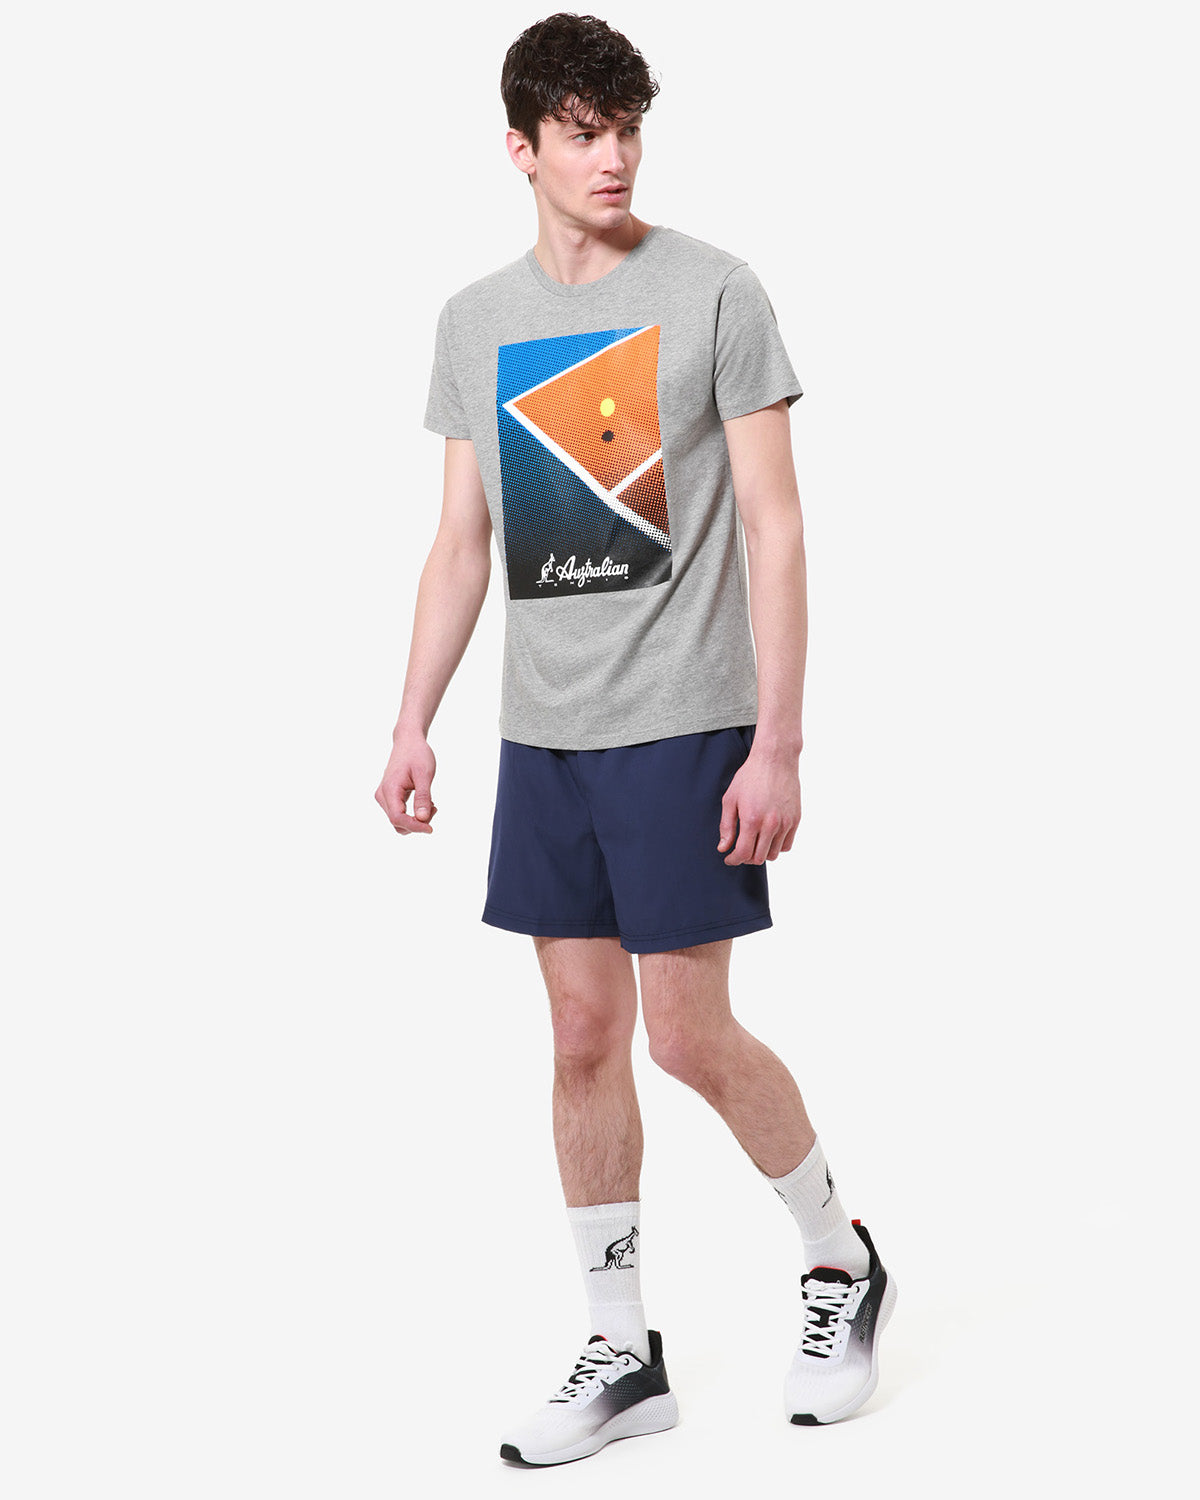 Court Graphic T-shirt: Australian Tennis